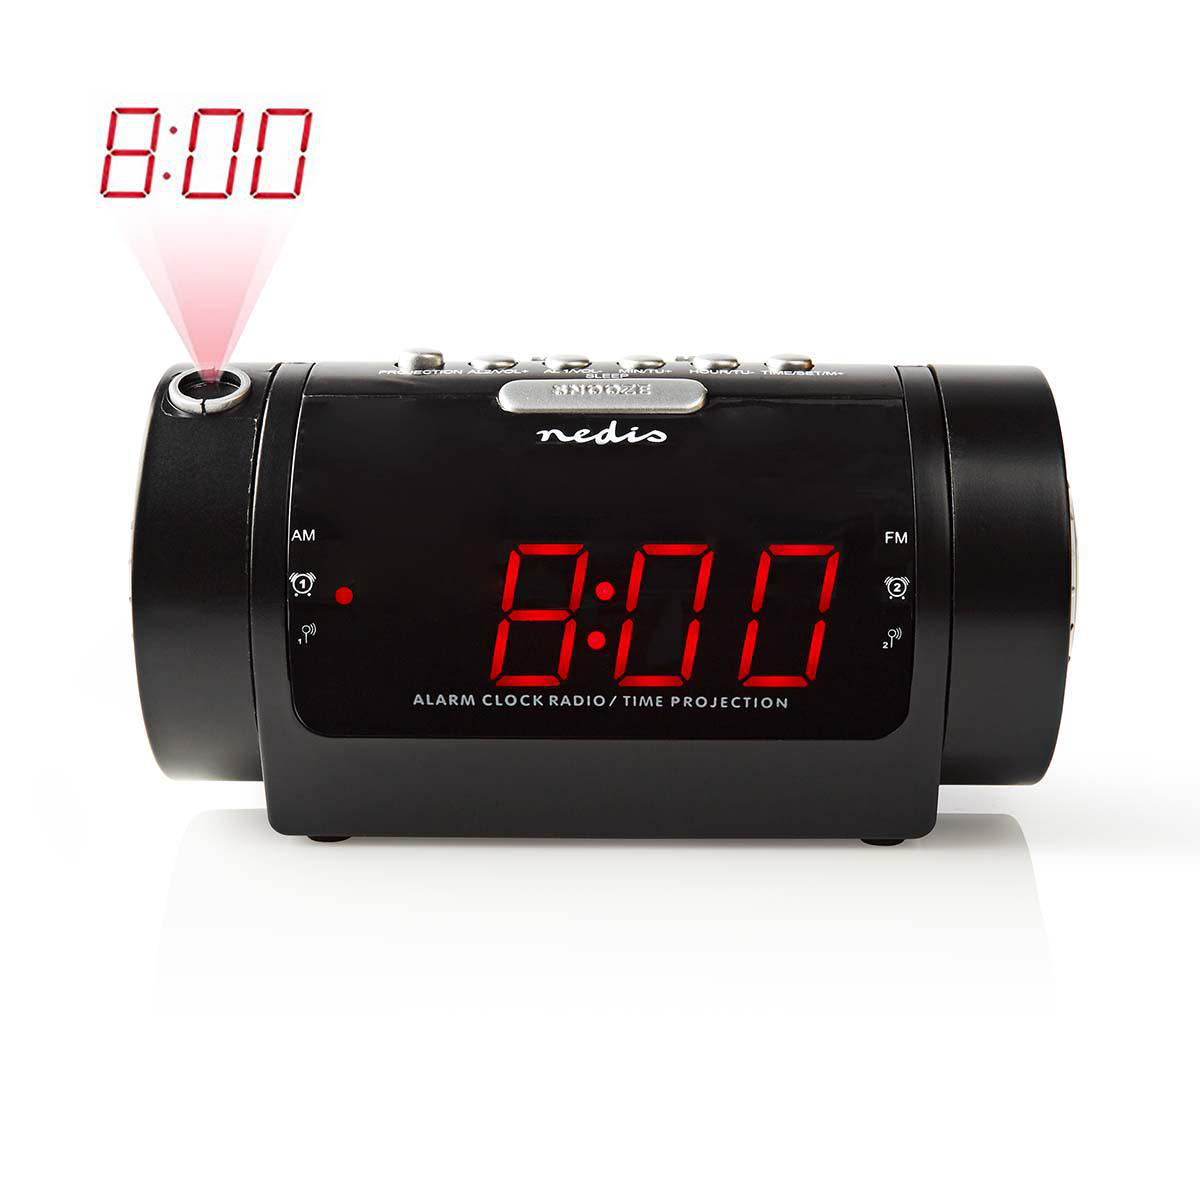 Talk Harmonious loss Digital Alarm Clock Radio | LED Display | Time projection | AM / FM |  Snooze function